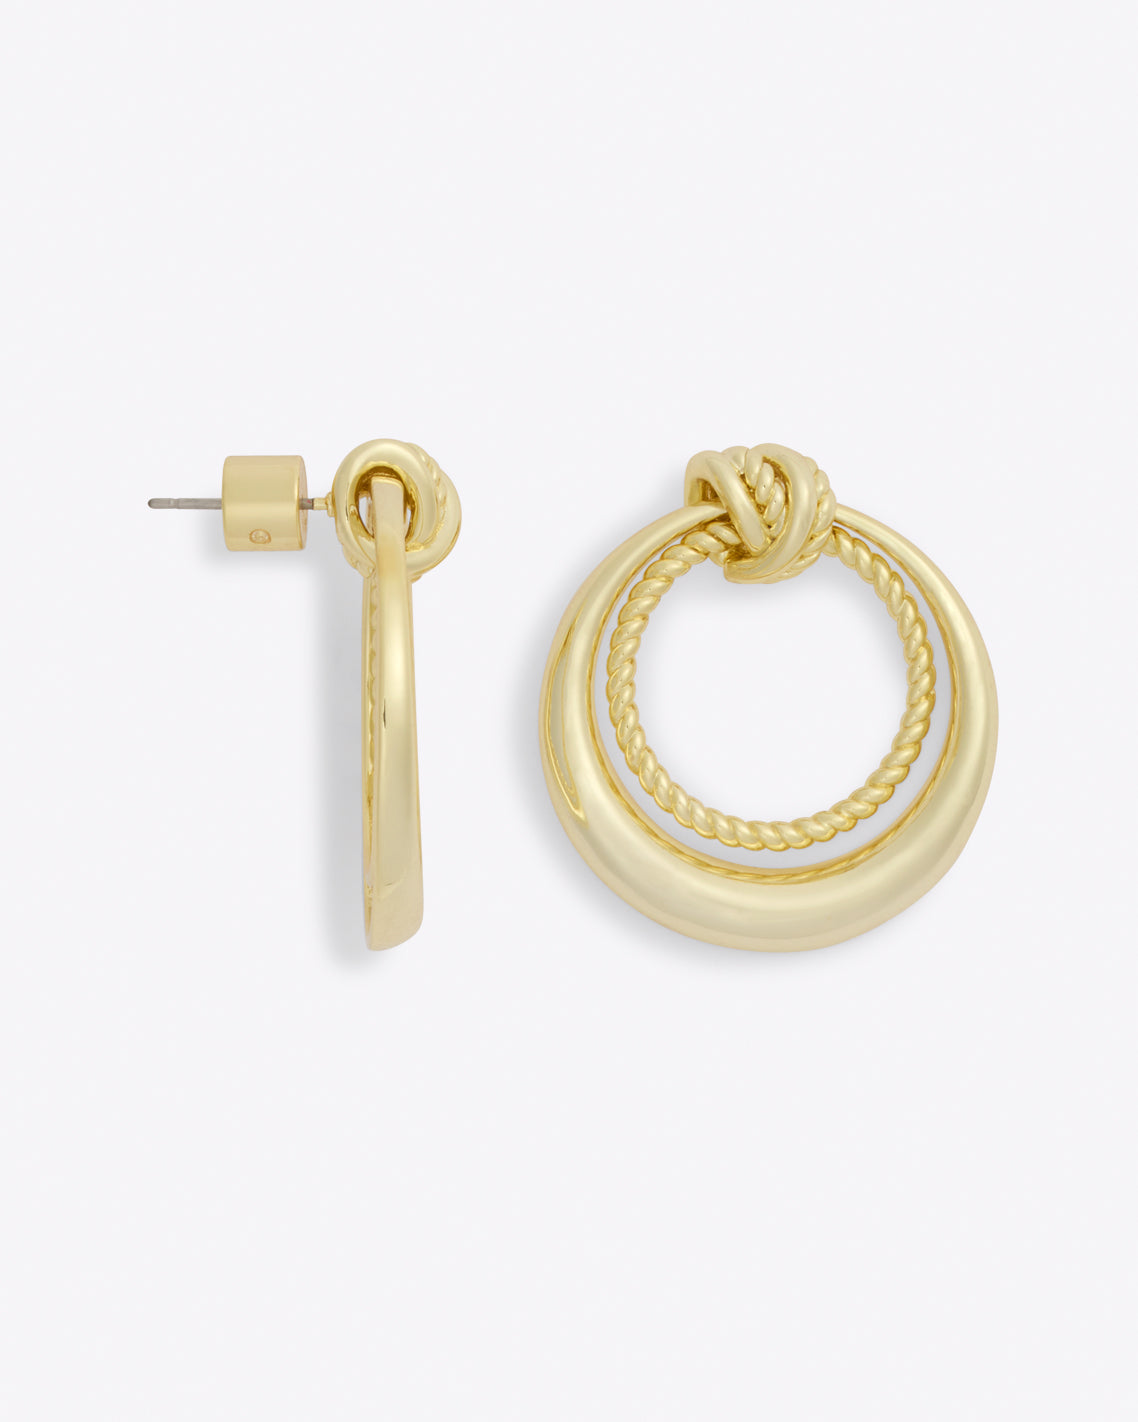 Knot Top Earrings in Gold